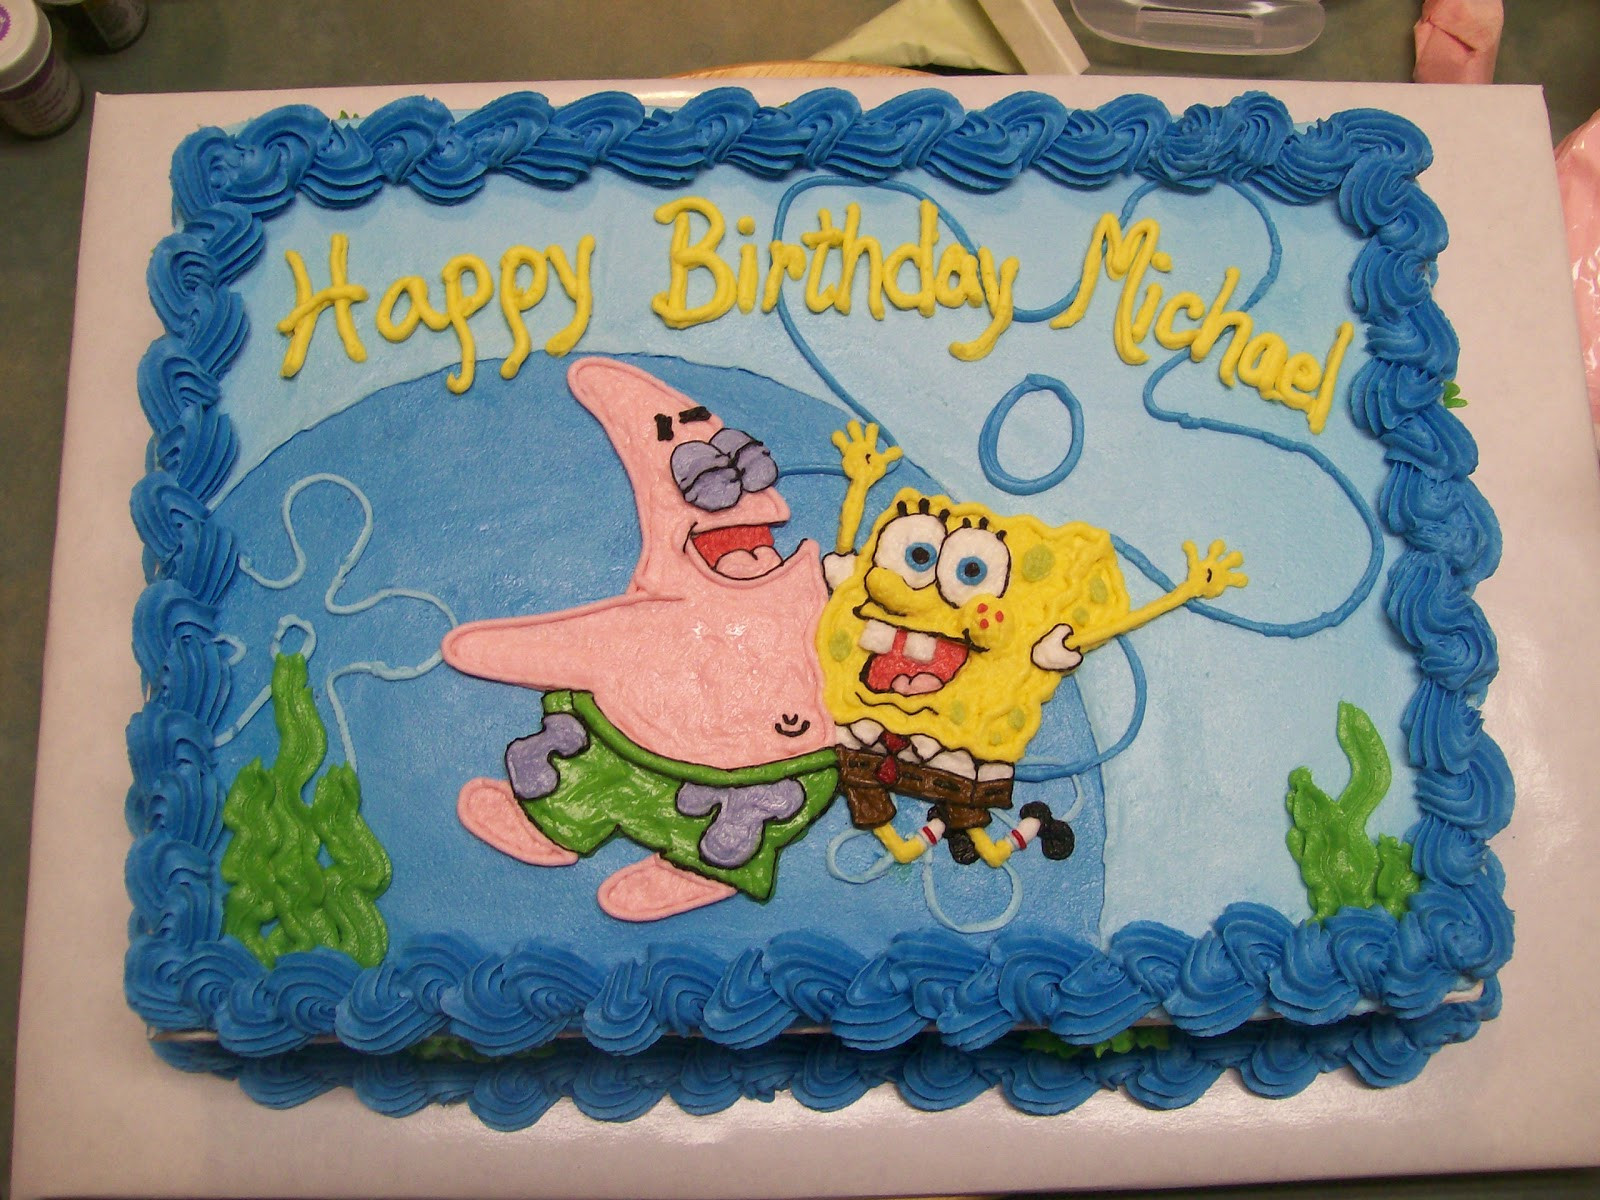 Happy Birthday Patrick Cake
 Birthday Cake Center Spongebob and Patrick